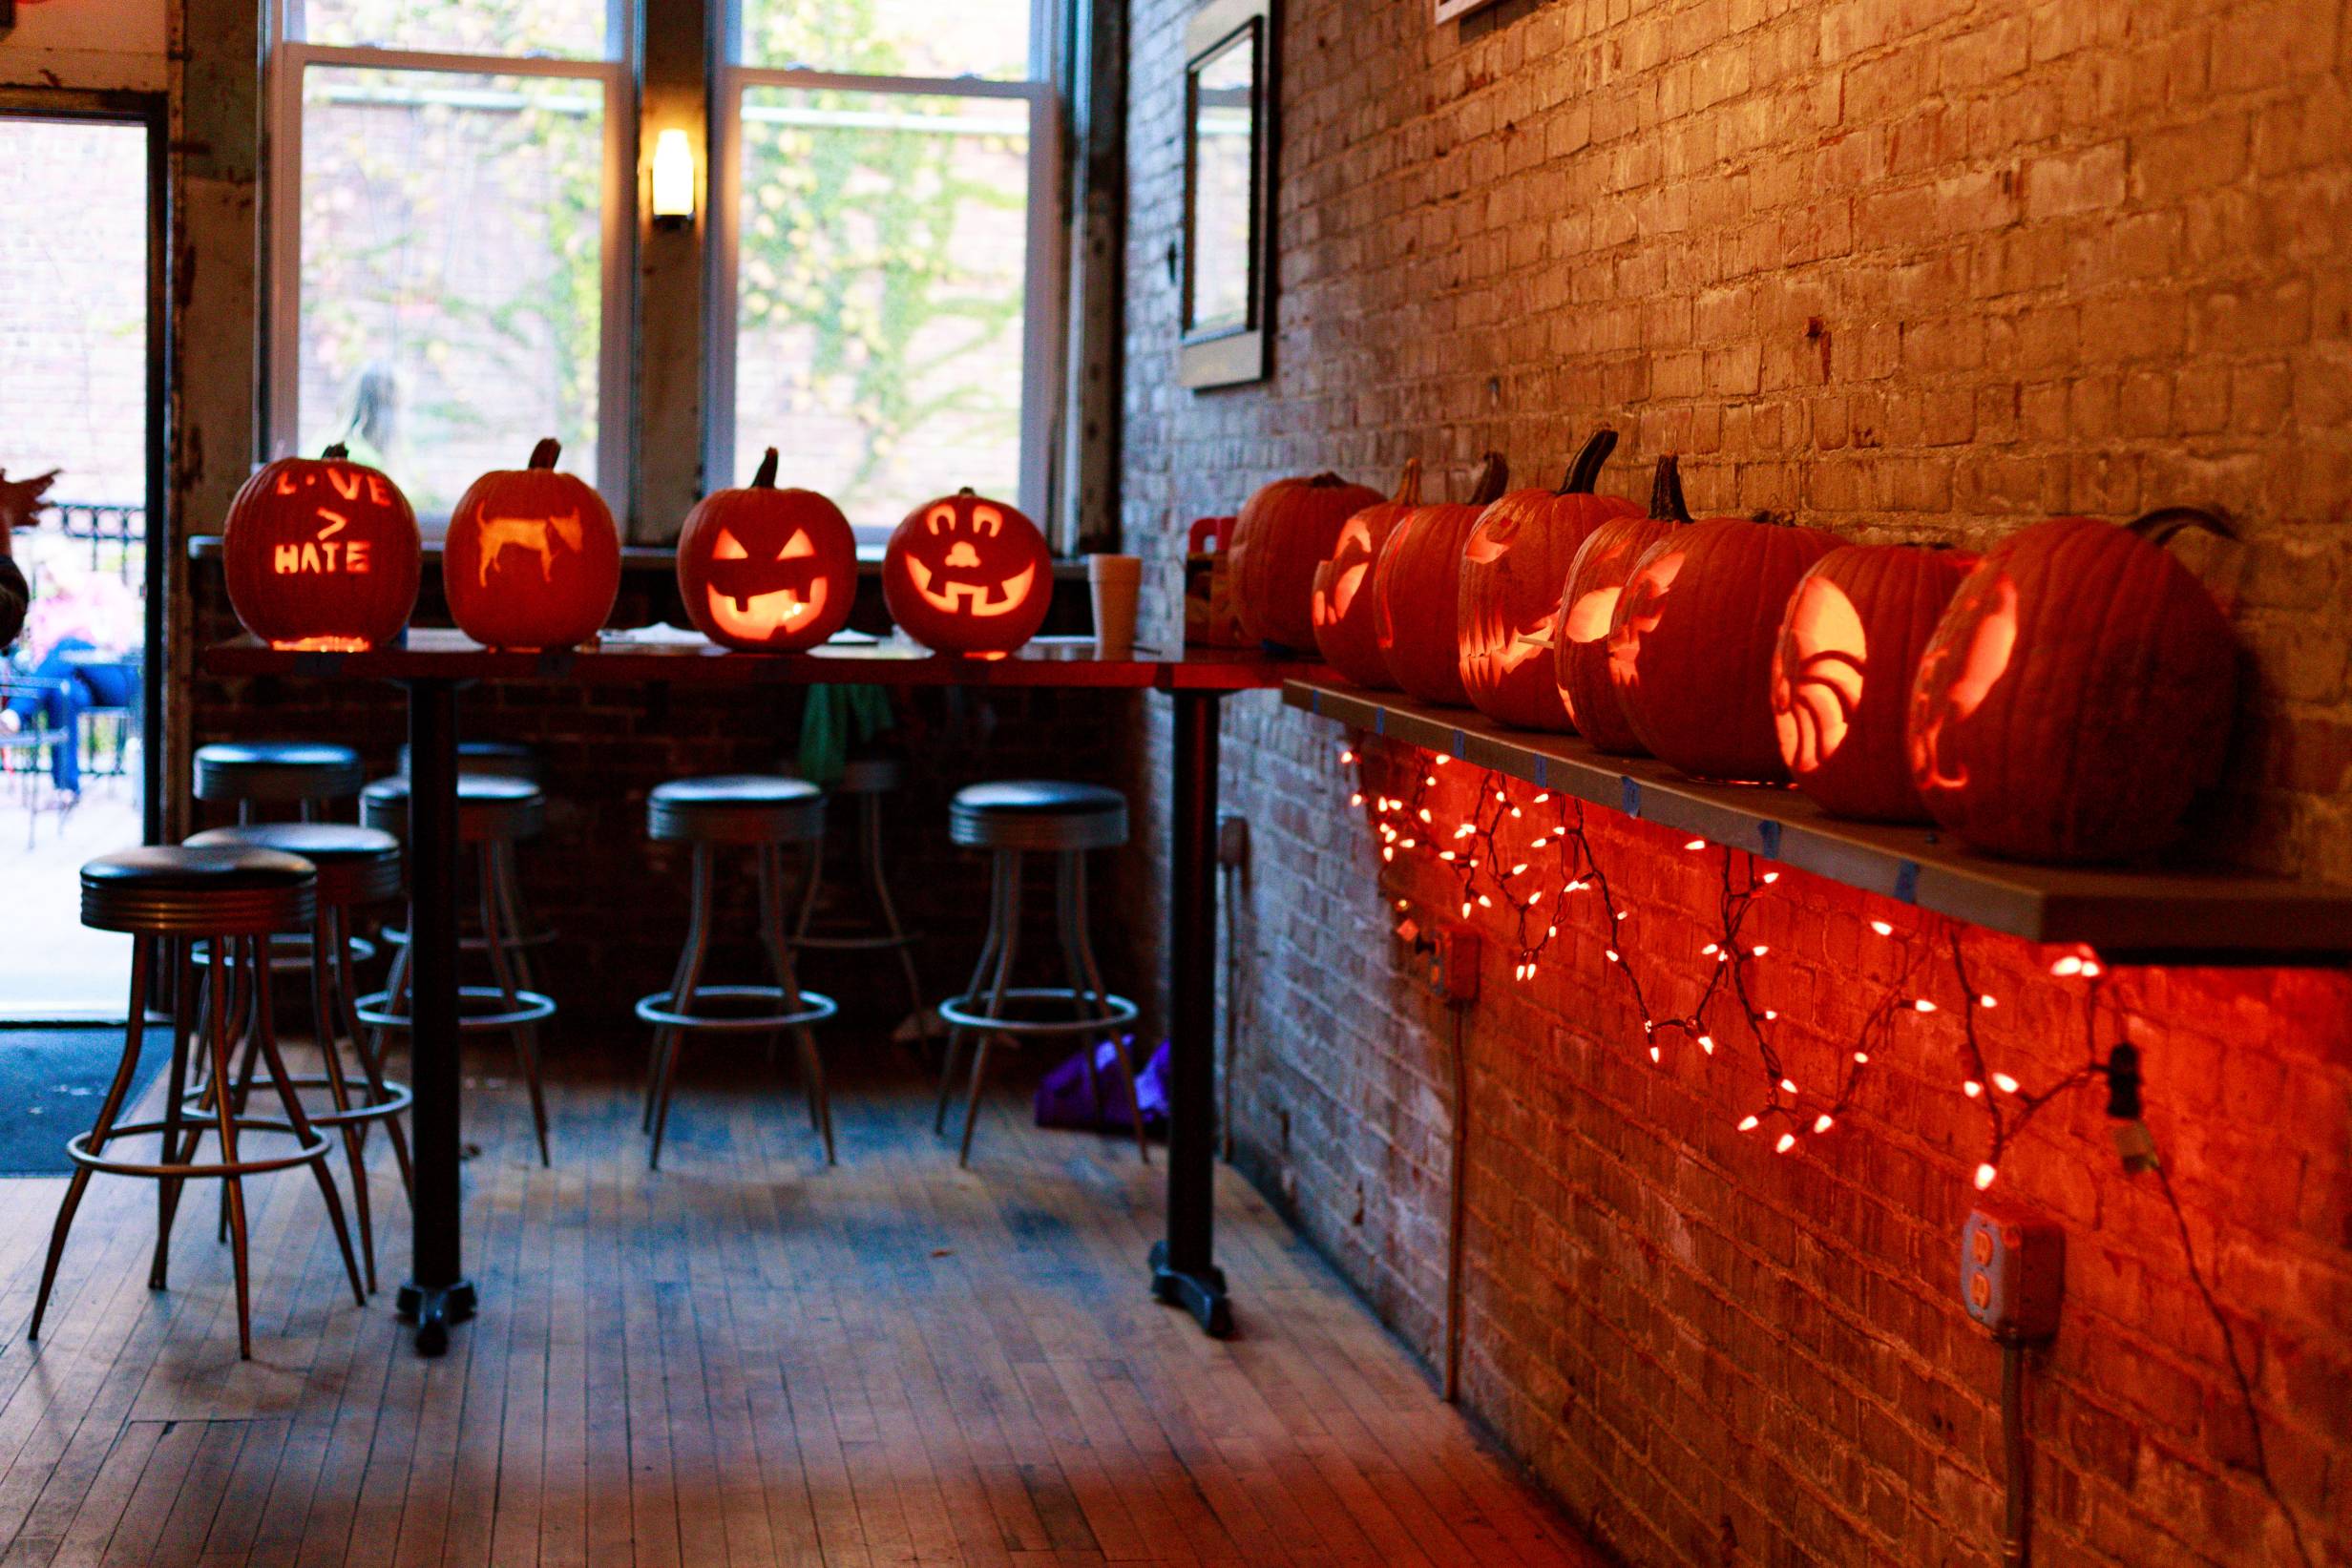 Quality Bar hosts annual pumpkin carving contest